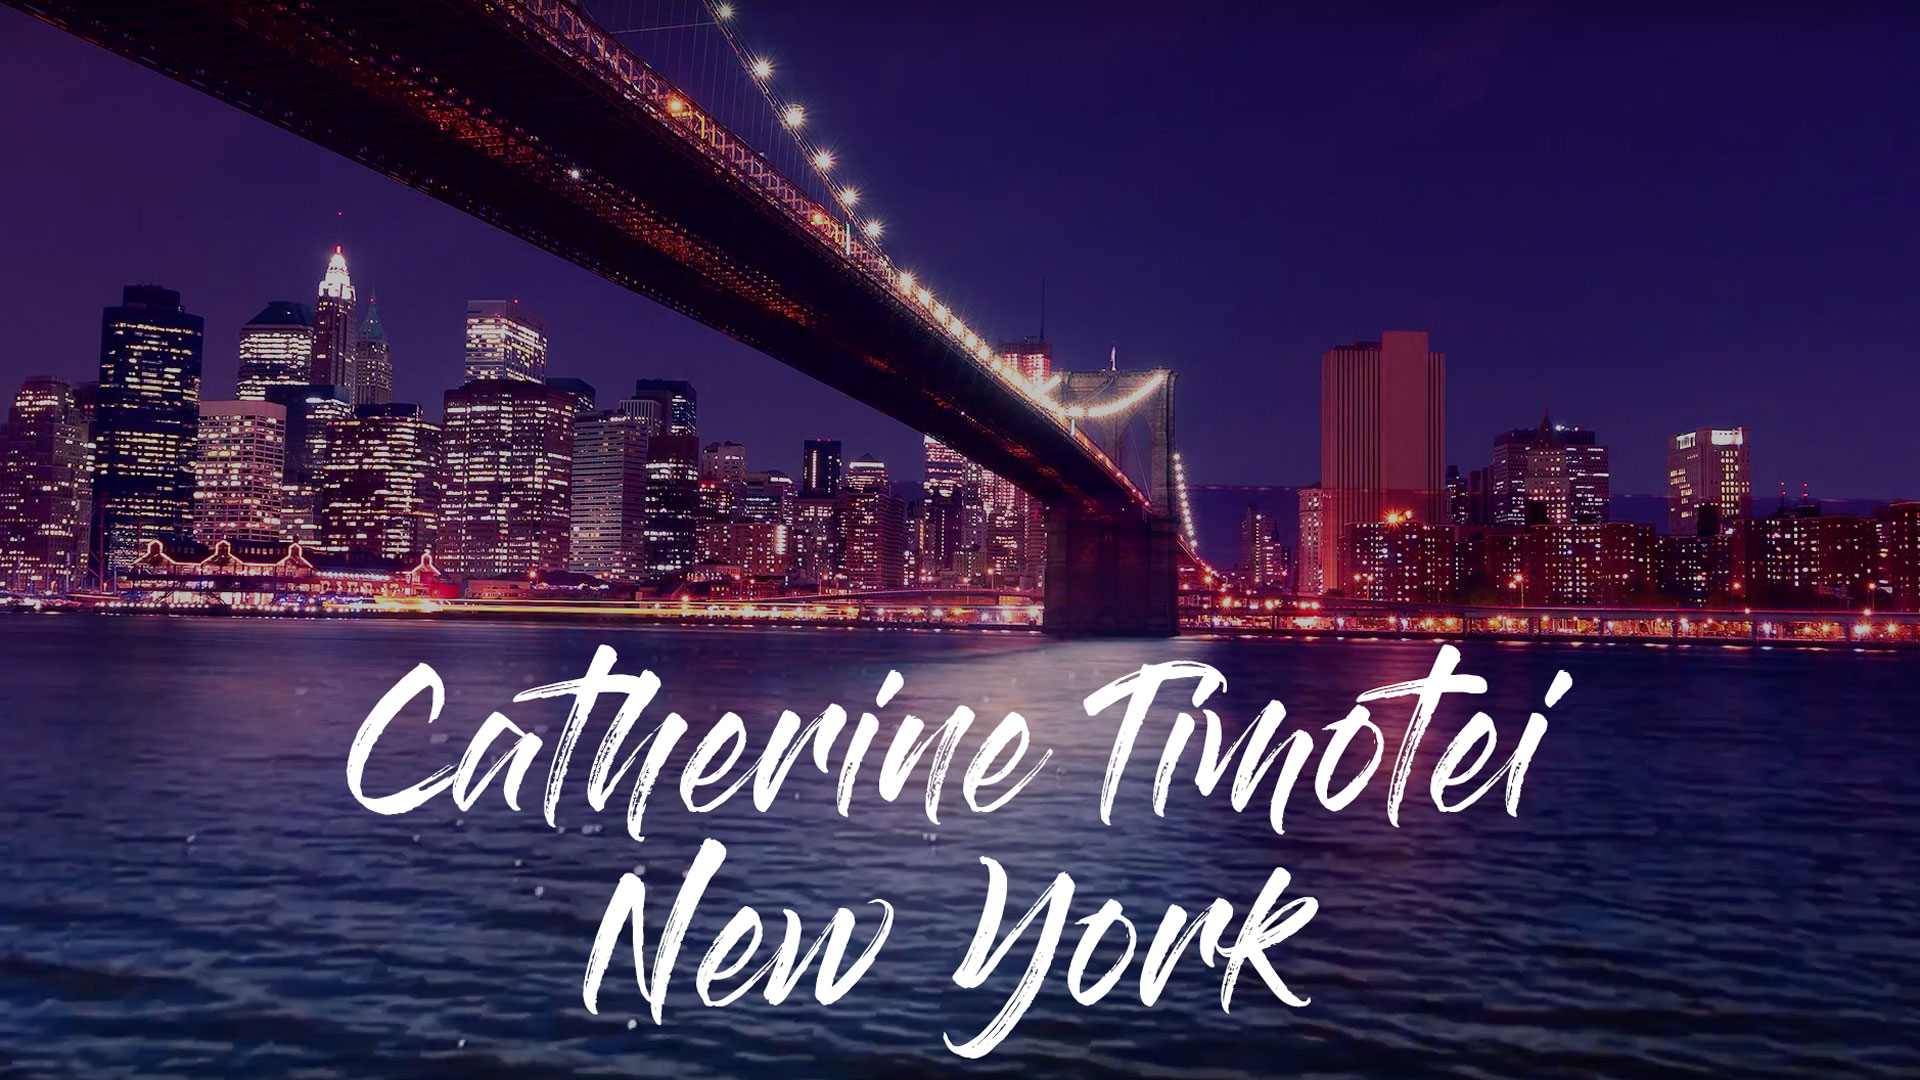 Catherine Timotei New York Exhibition